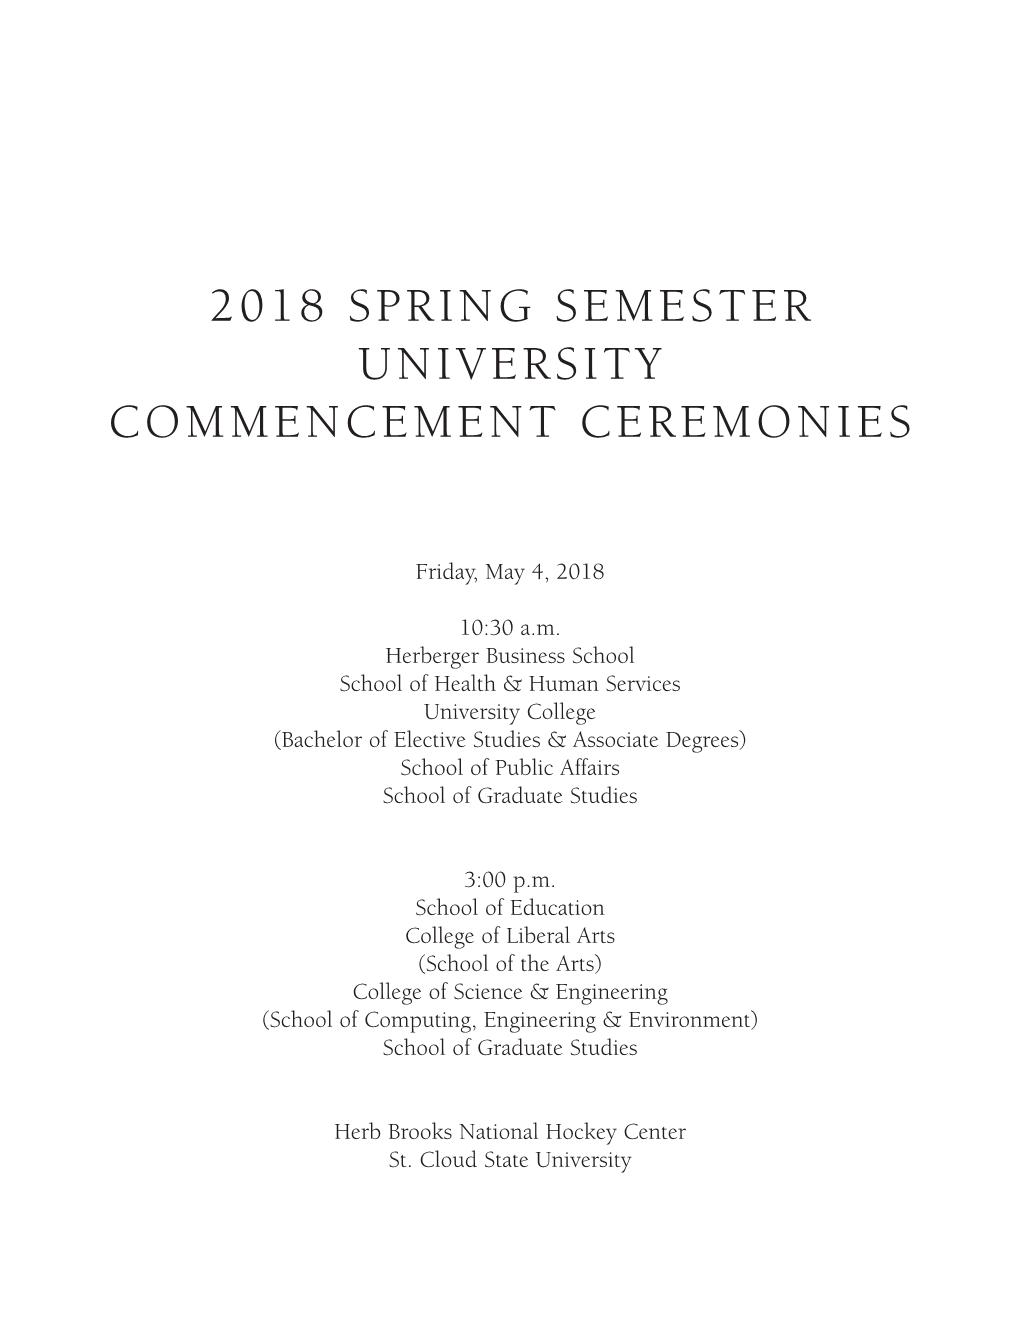 2018 Spring Semester University Commencement Ceremonies